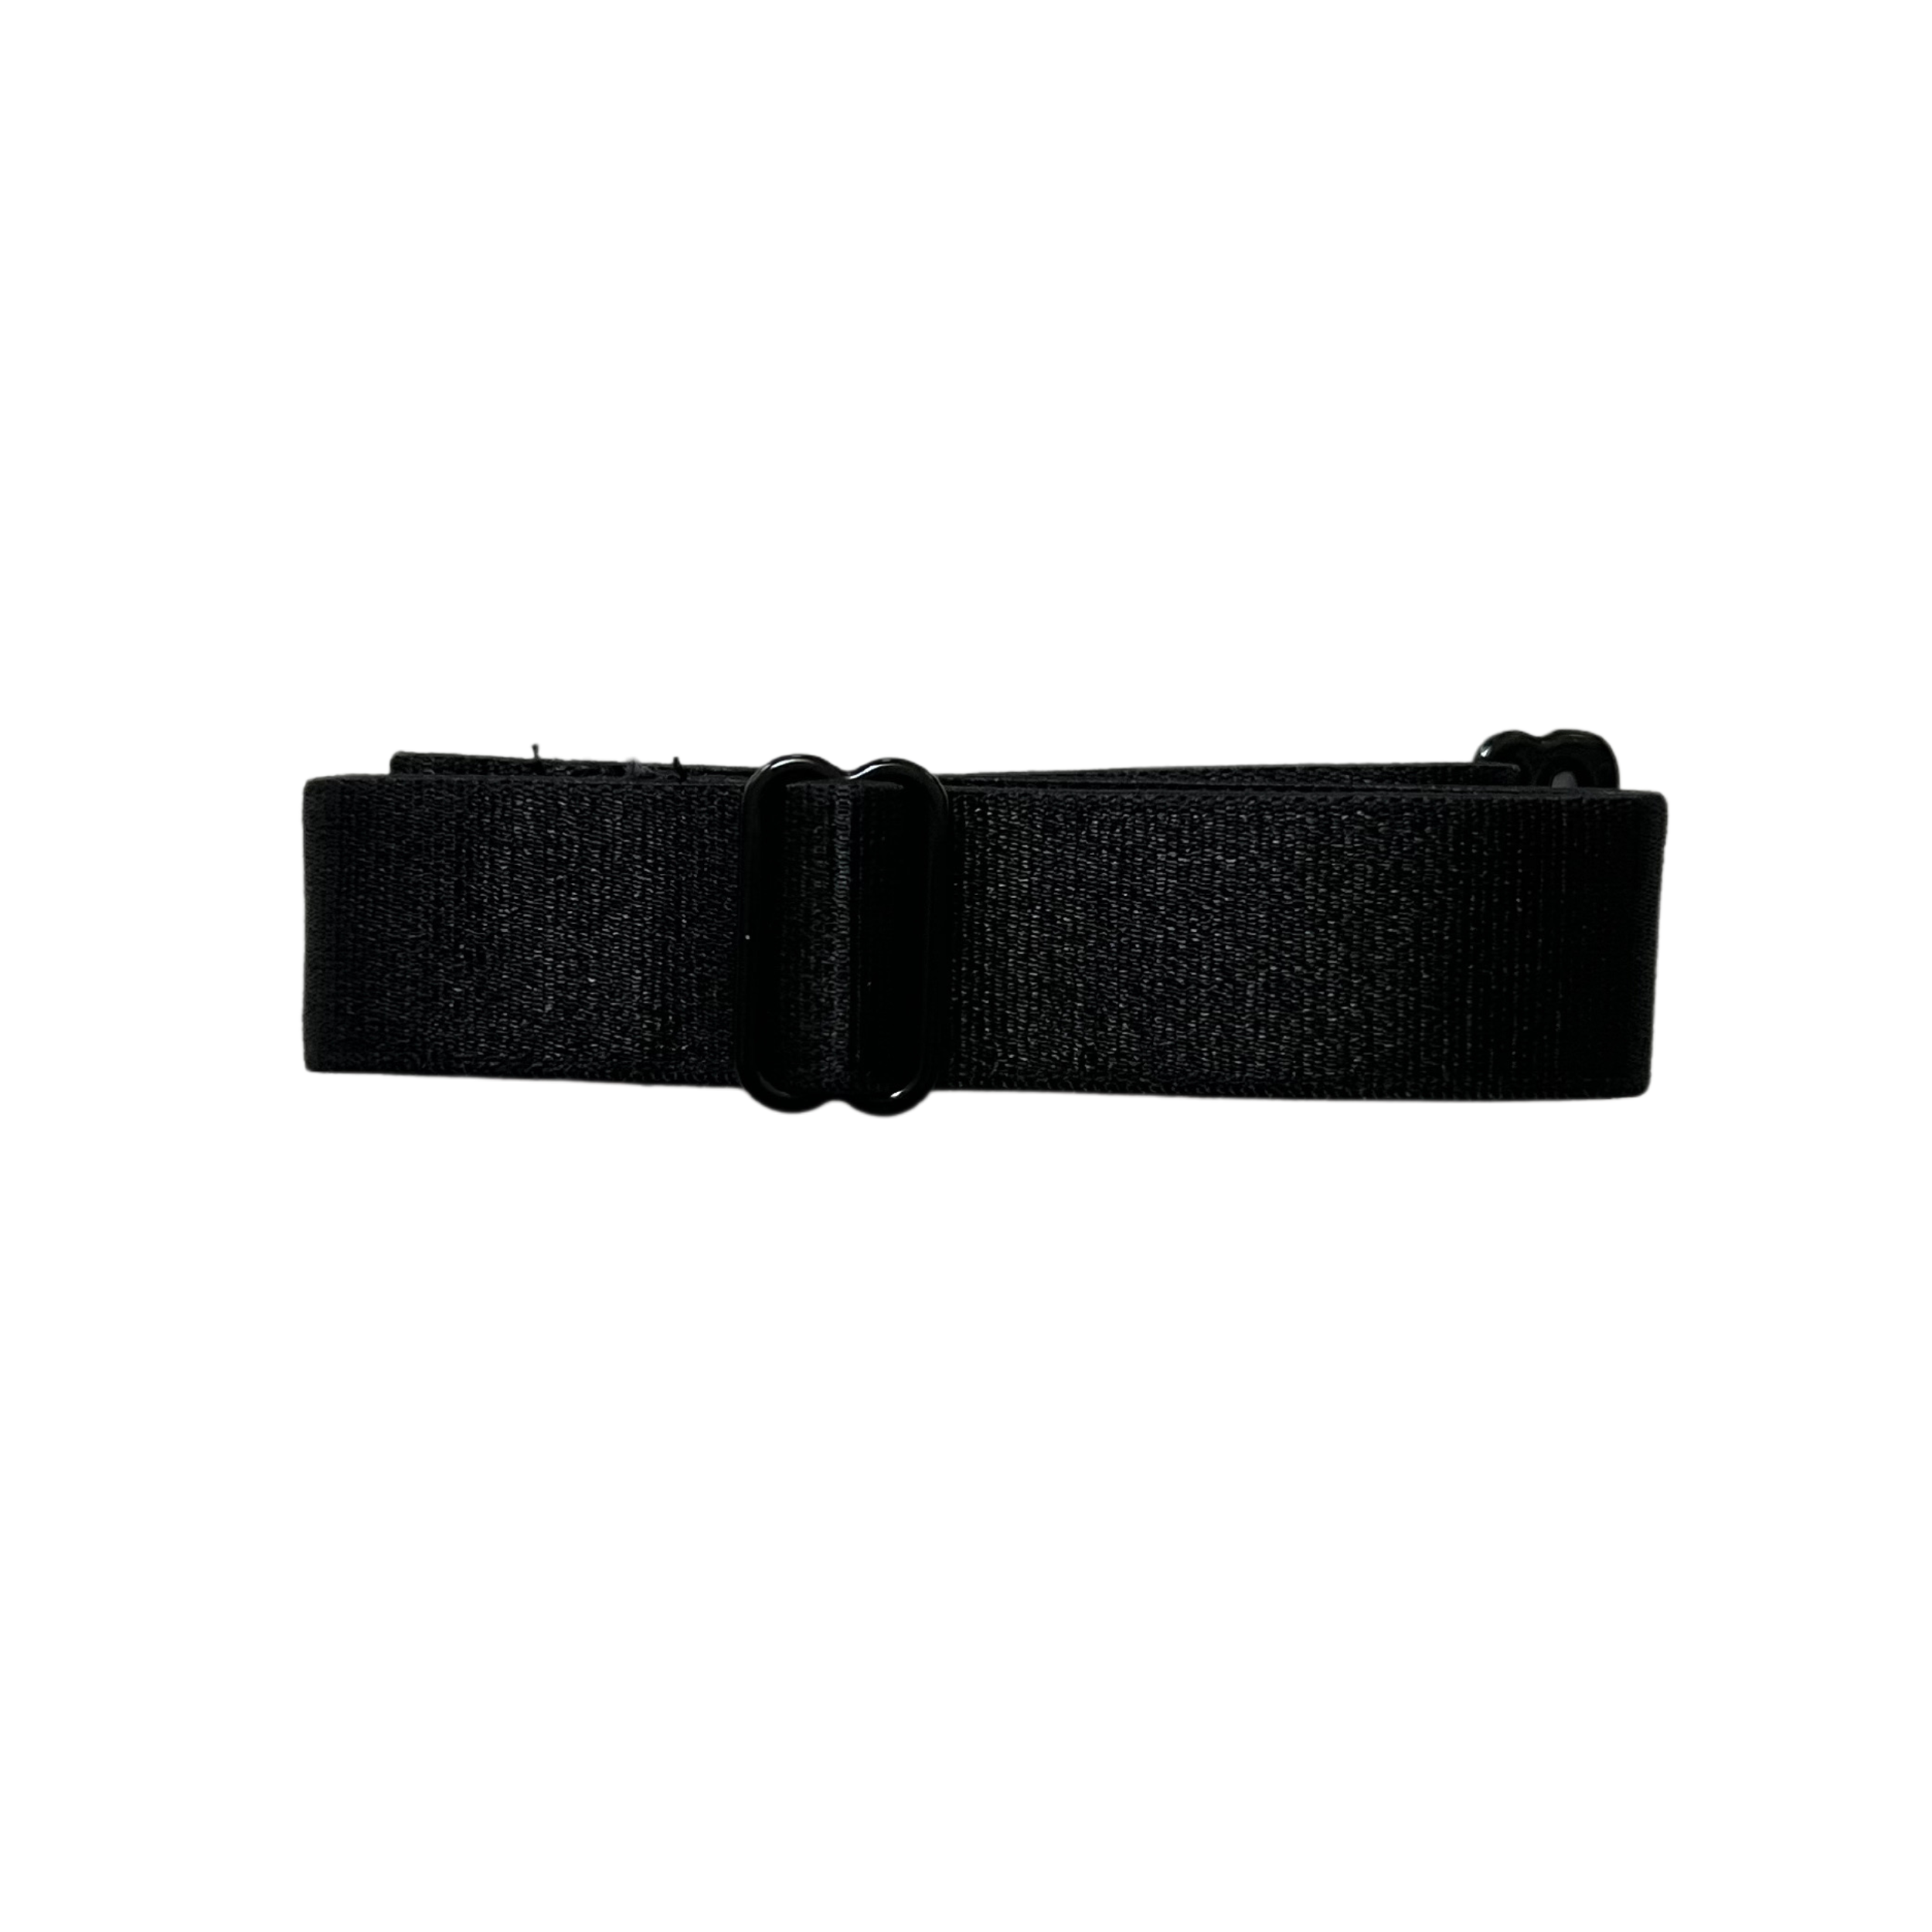 Essential Adjustable Bra Strap Clip in Black & Buff